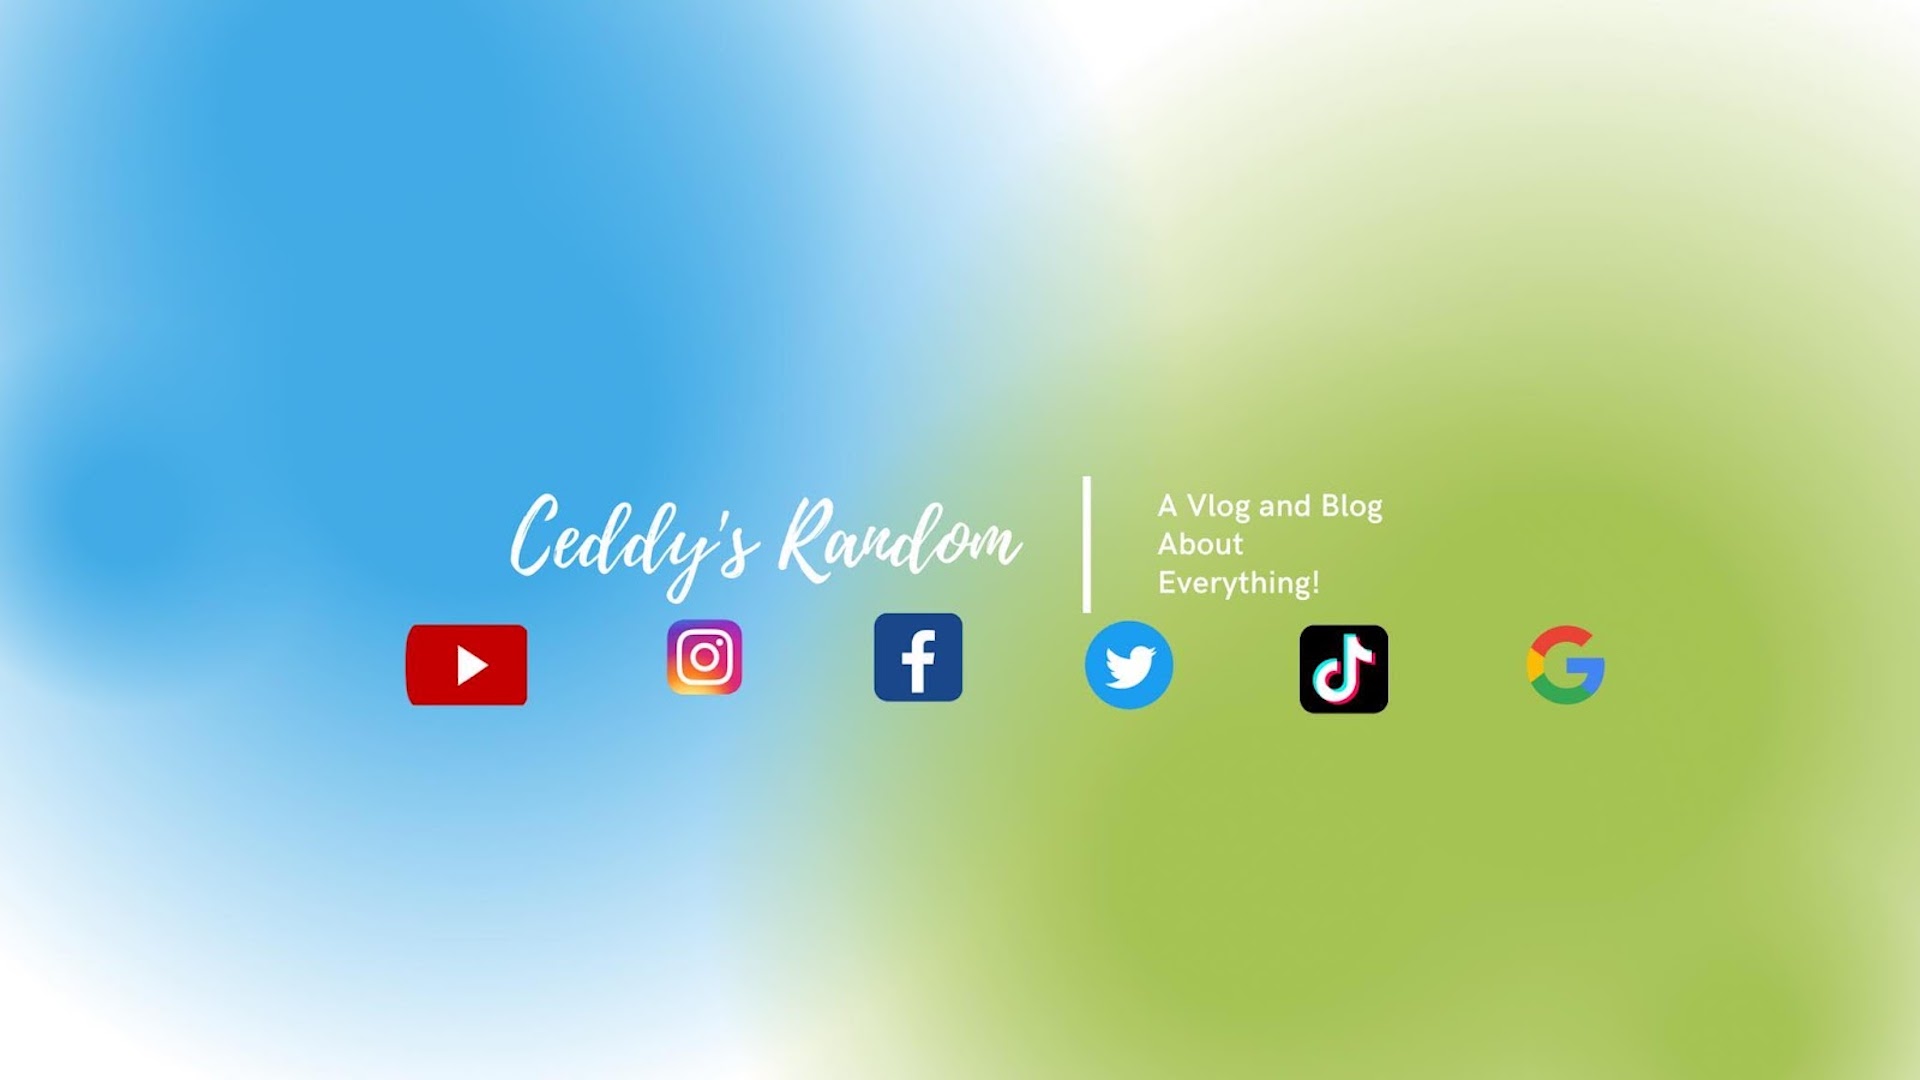 Ceddy’s Random